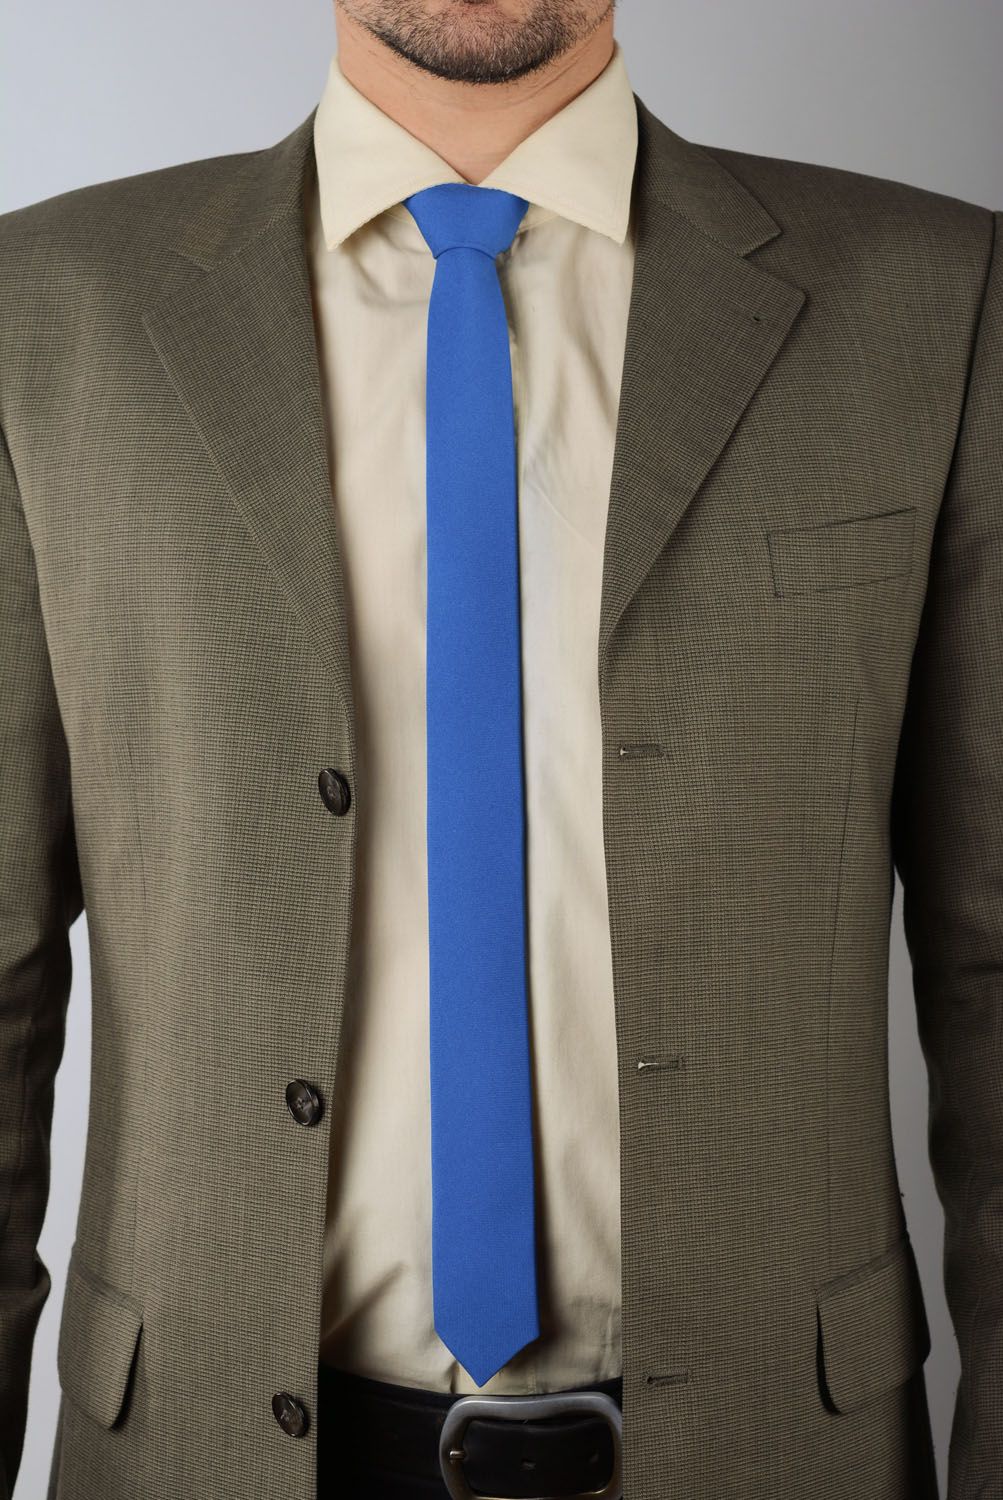 Cravate fine bleue faite main photo 1